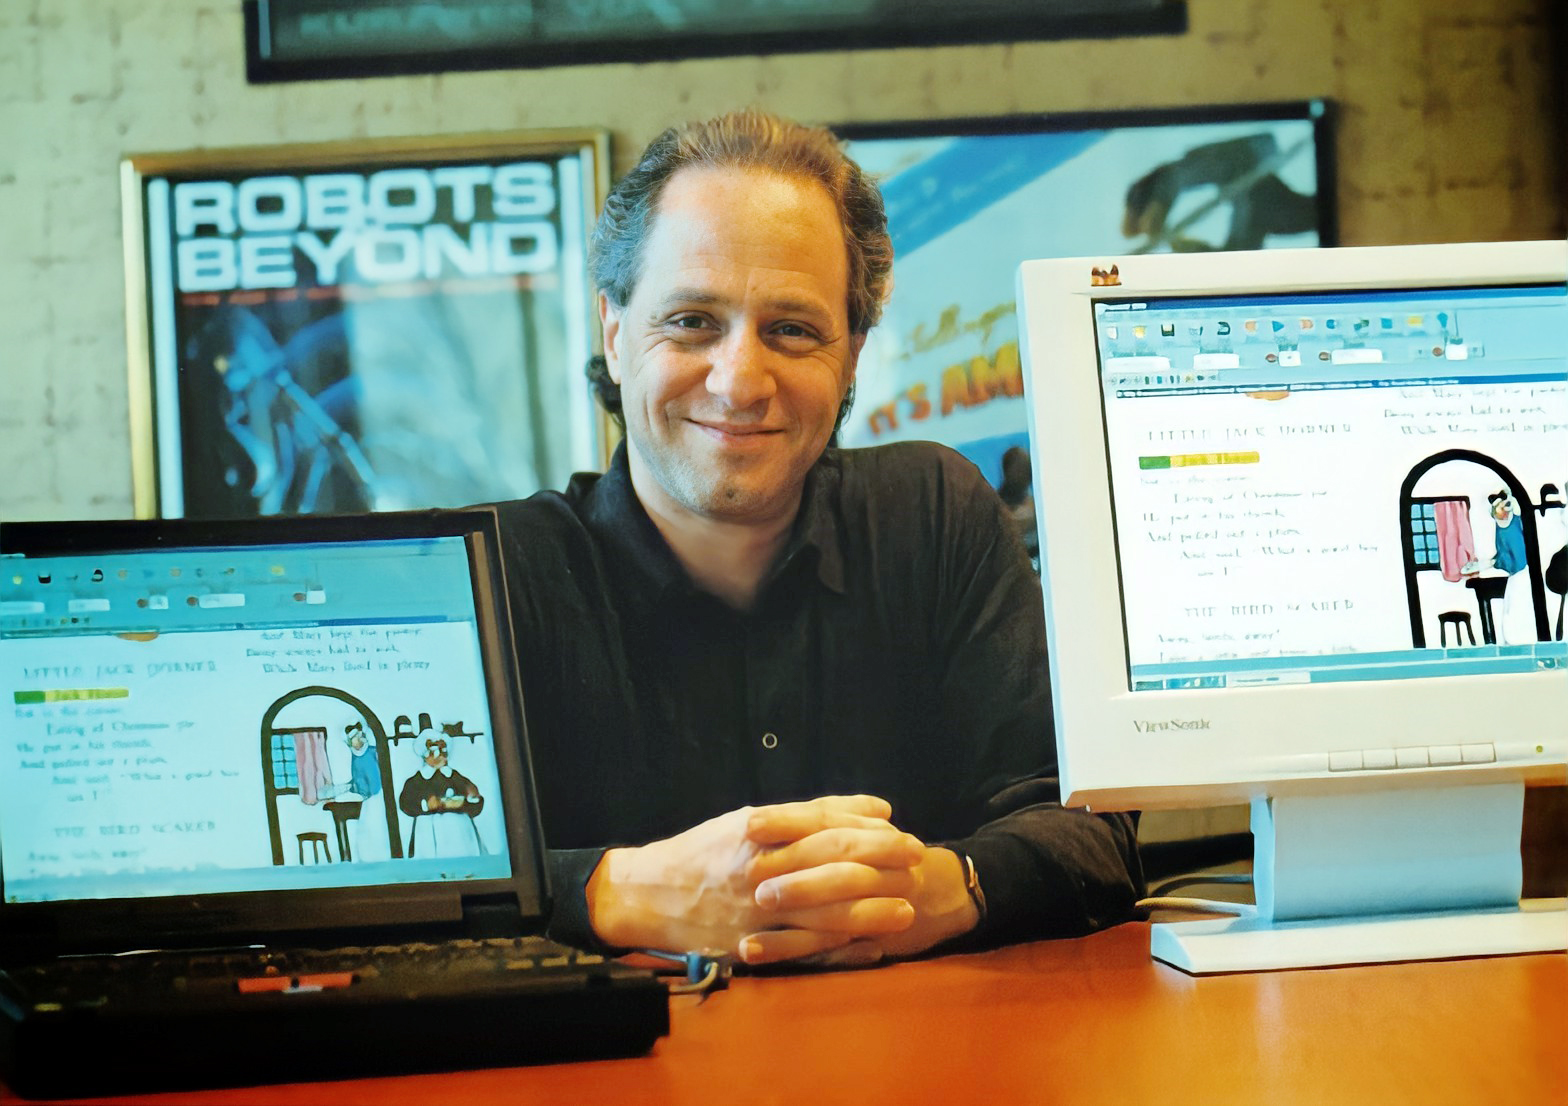 Ray Kurzweil - Wikipedia